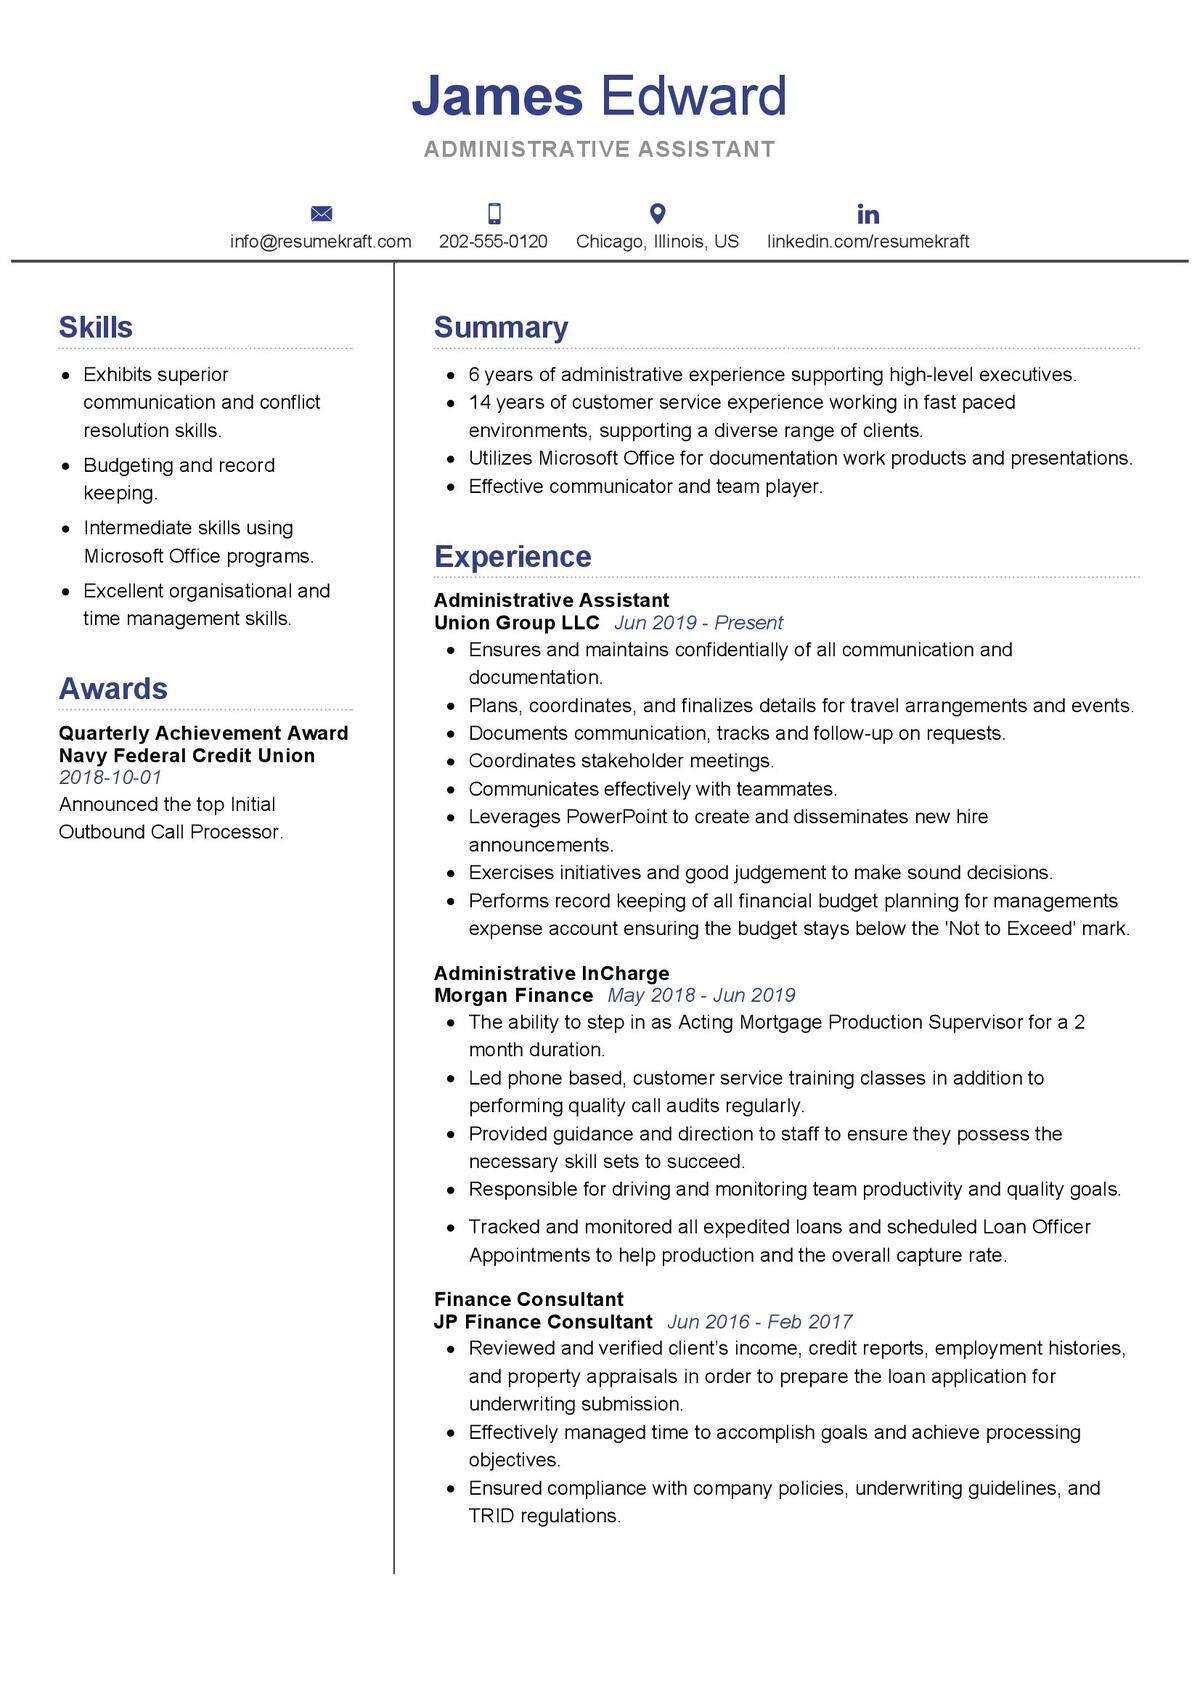 Resume Sample format for Administrative assistant Administrative assistant Resume Sample 2021 Writing Guide …